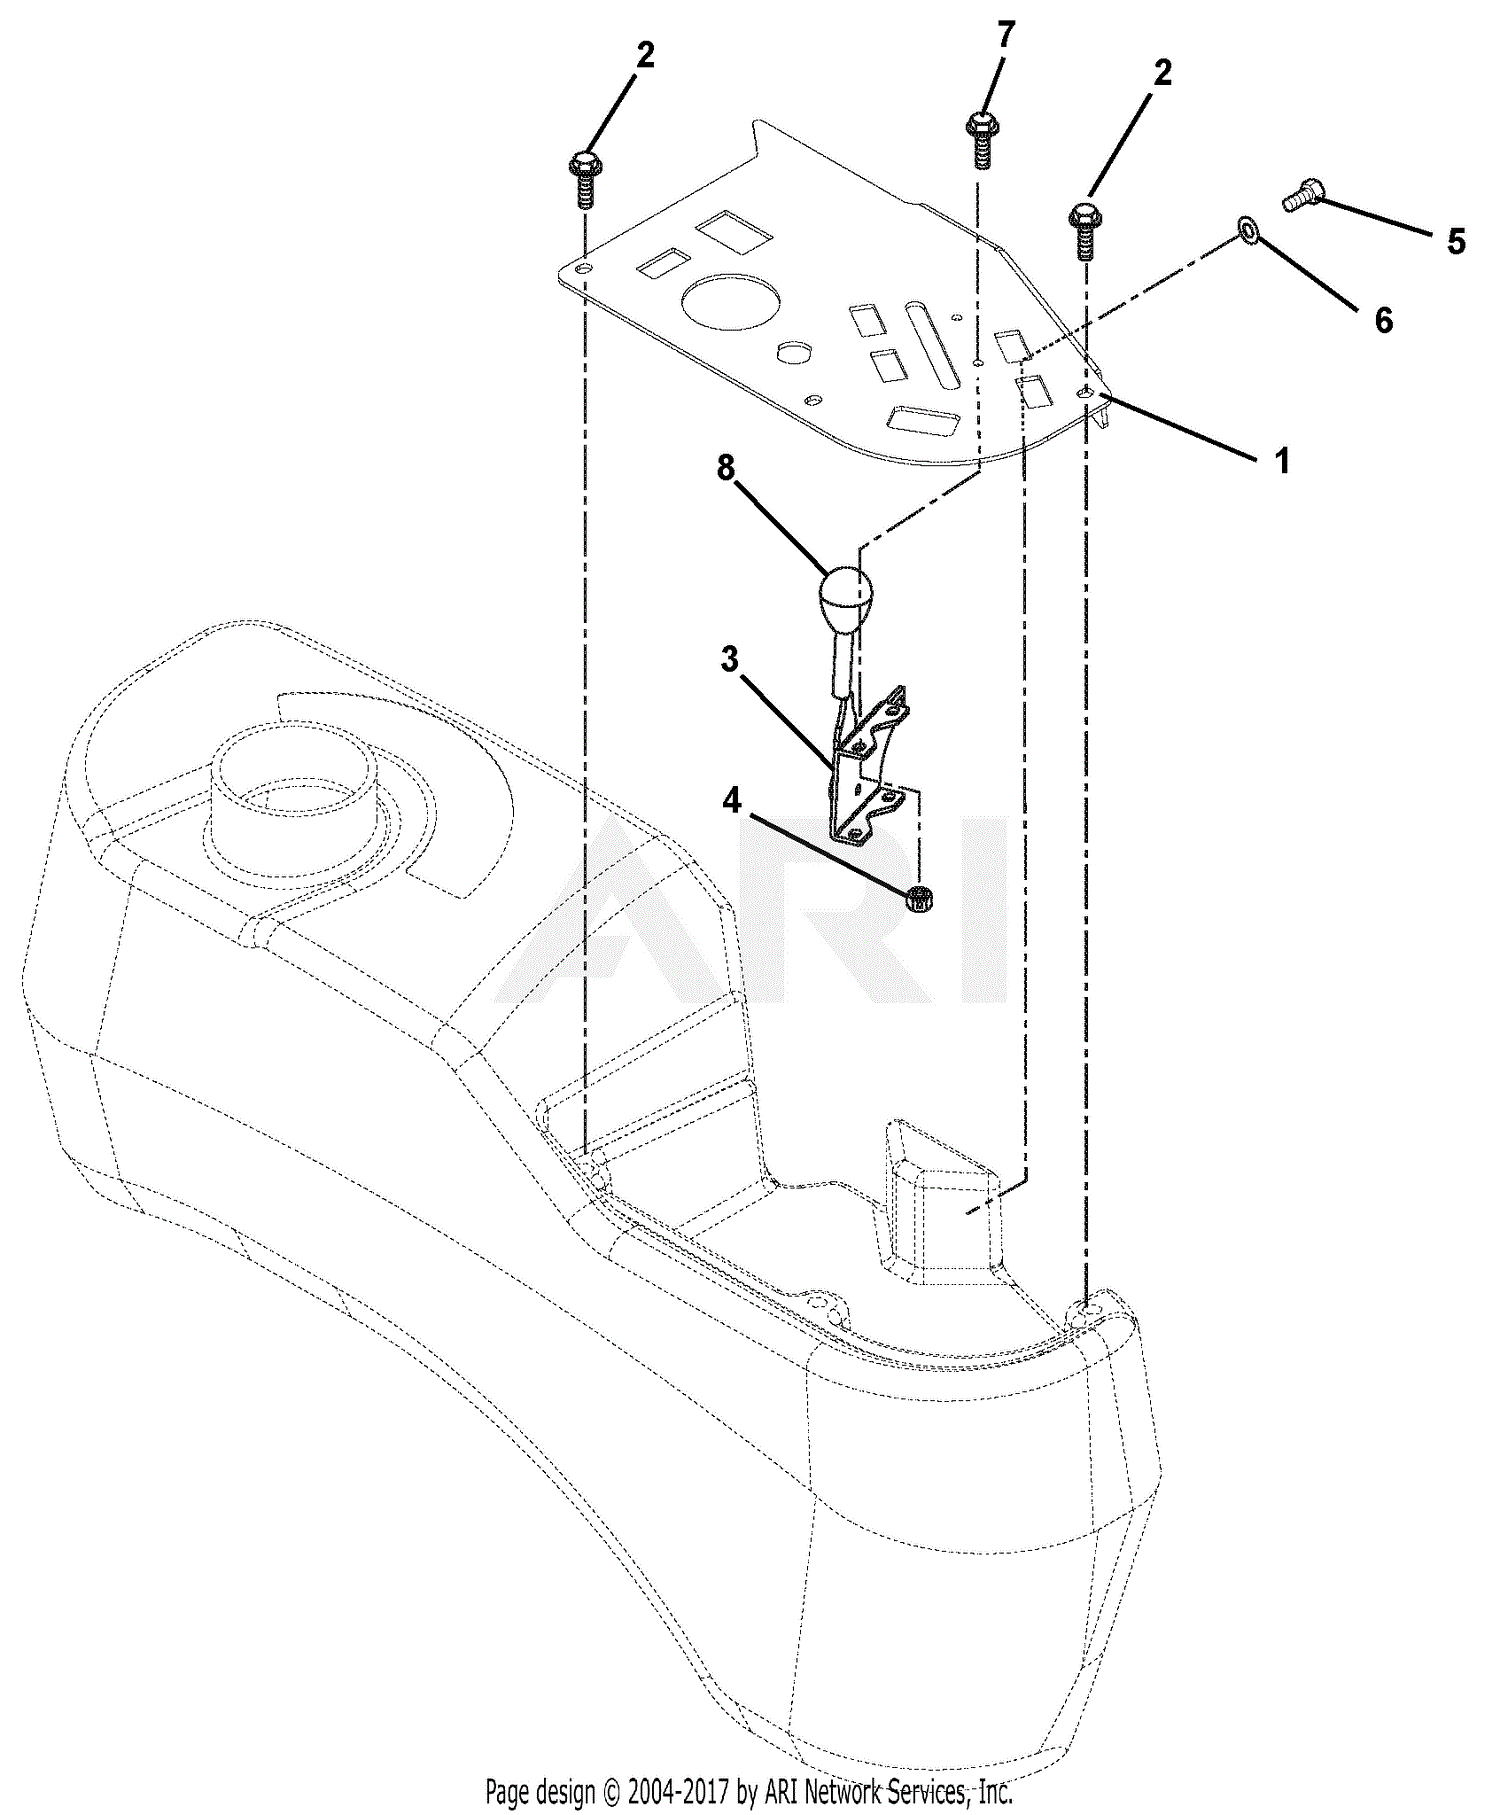 pm200 wiring diagram